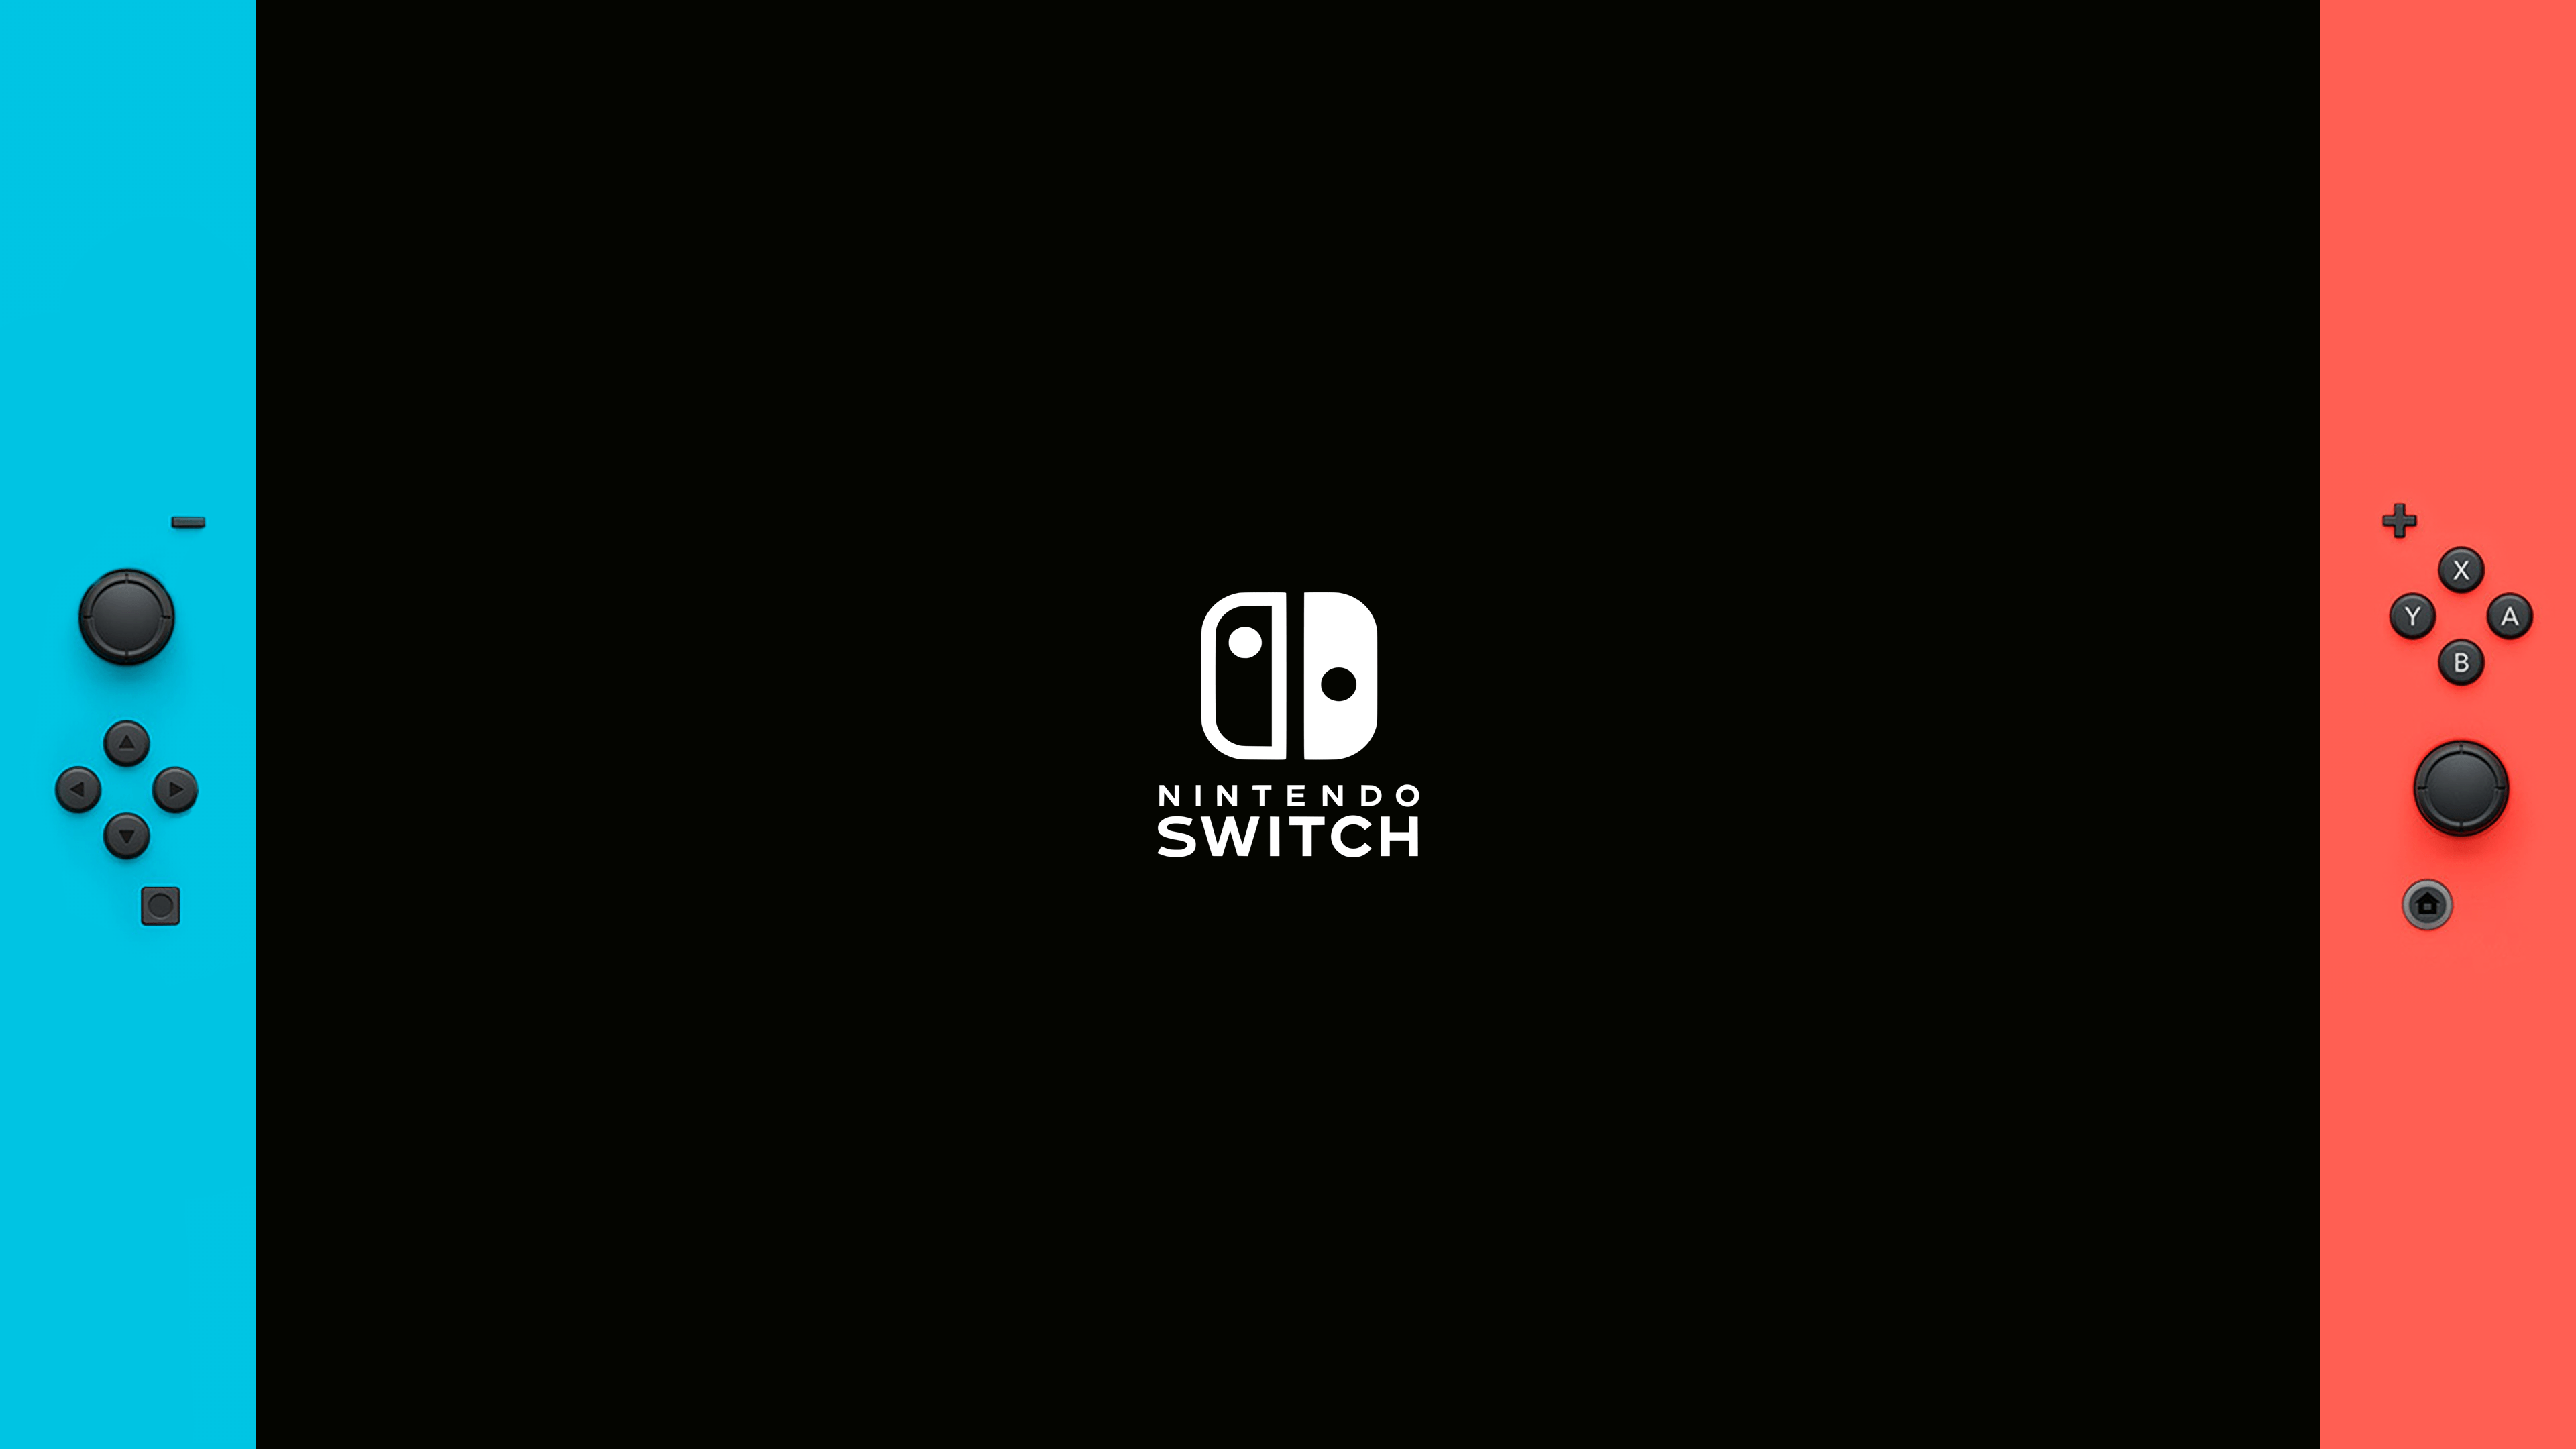 Nintendo Switch Wallpapers - Top Free Nintendo Switch ...